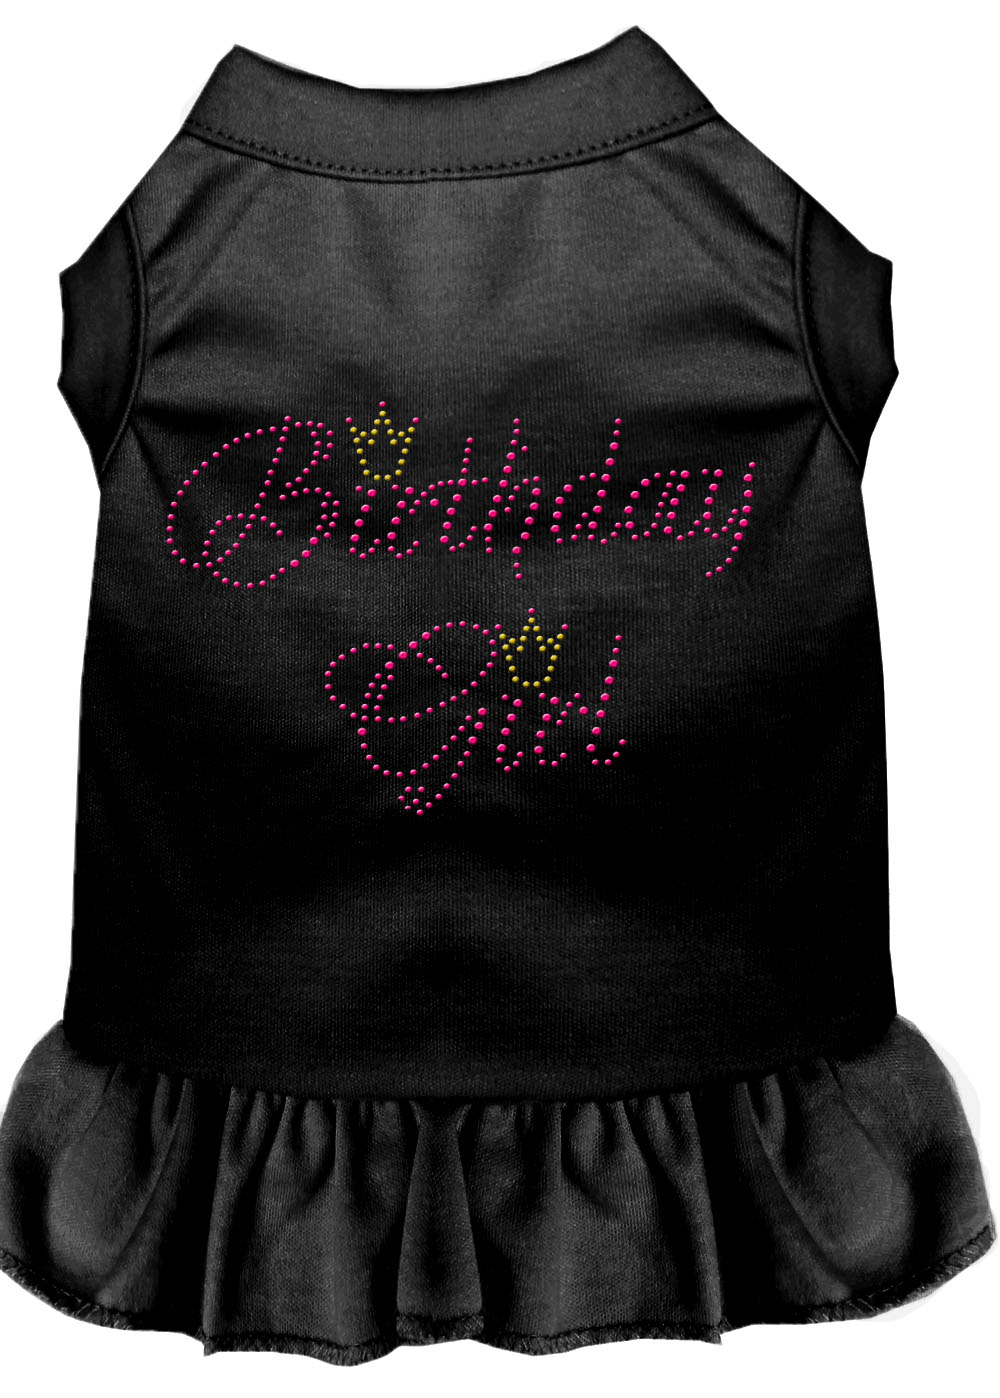 Birthday Girl Rhinestone Dress Black Sm